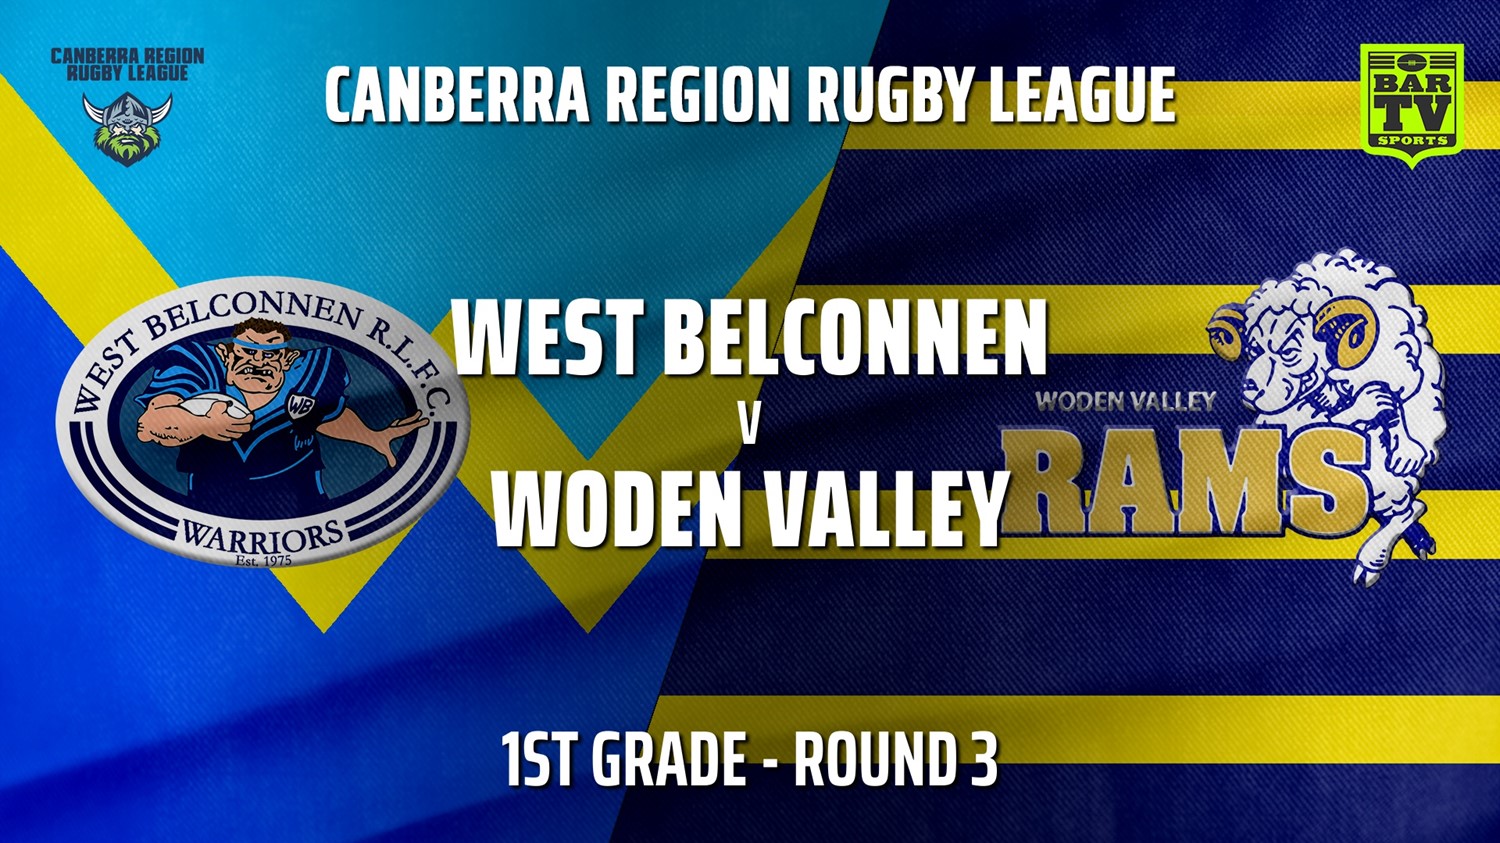 210501-CRRL Round 3 - 1st Grade - West Belconnen Warriors v Woden Valley Rams Minigame Slate Image